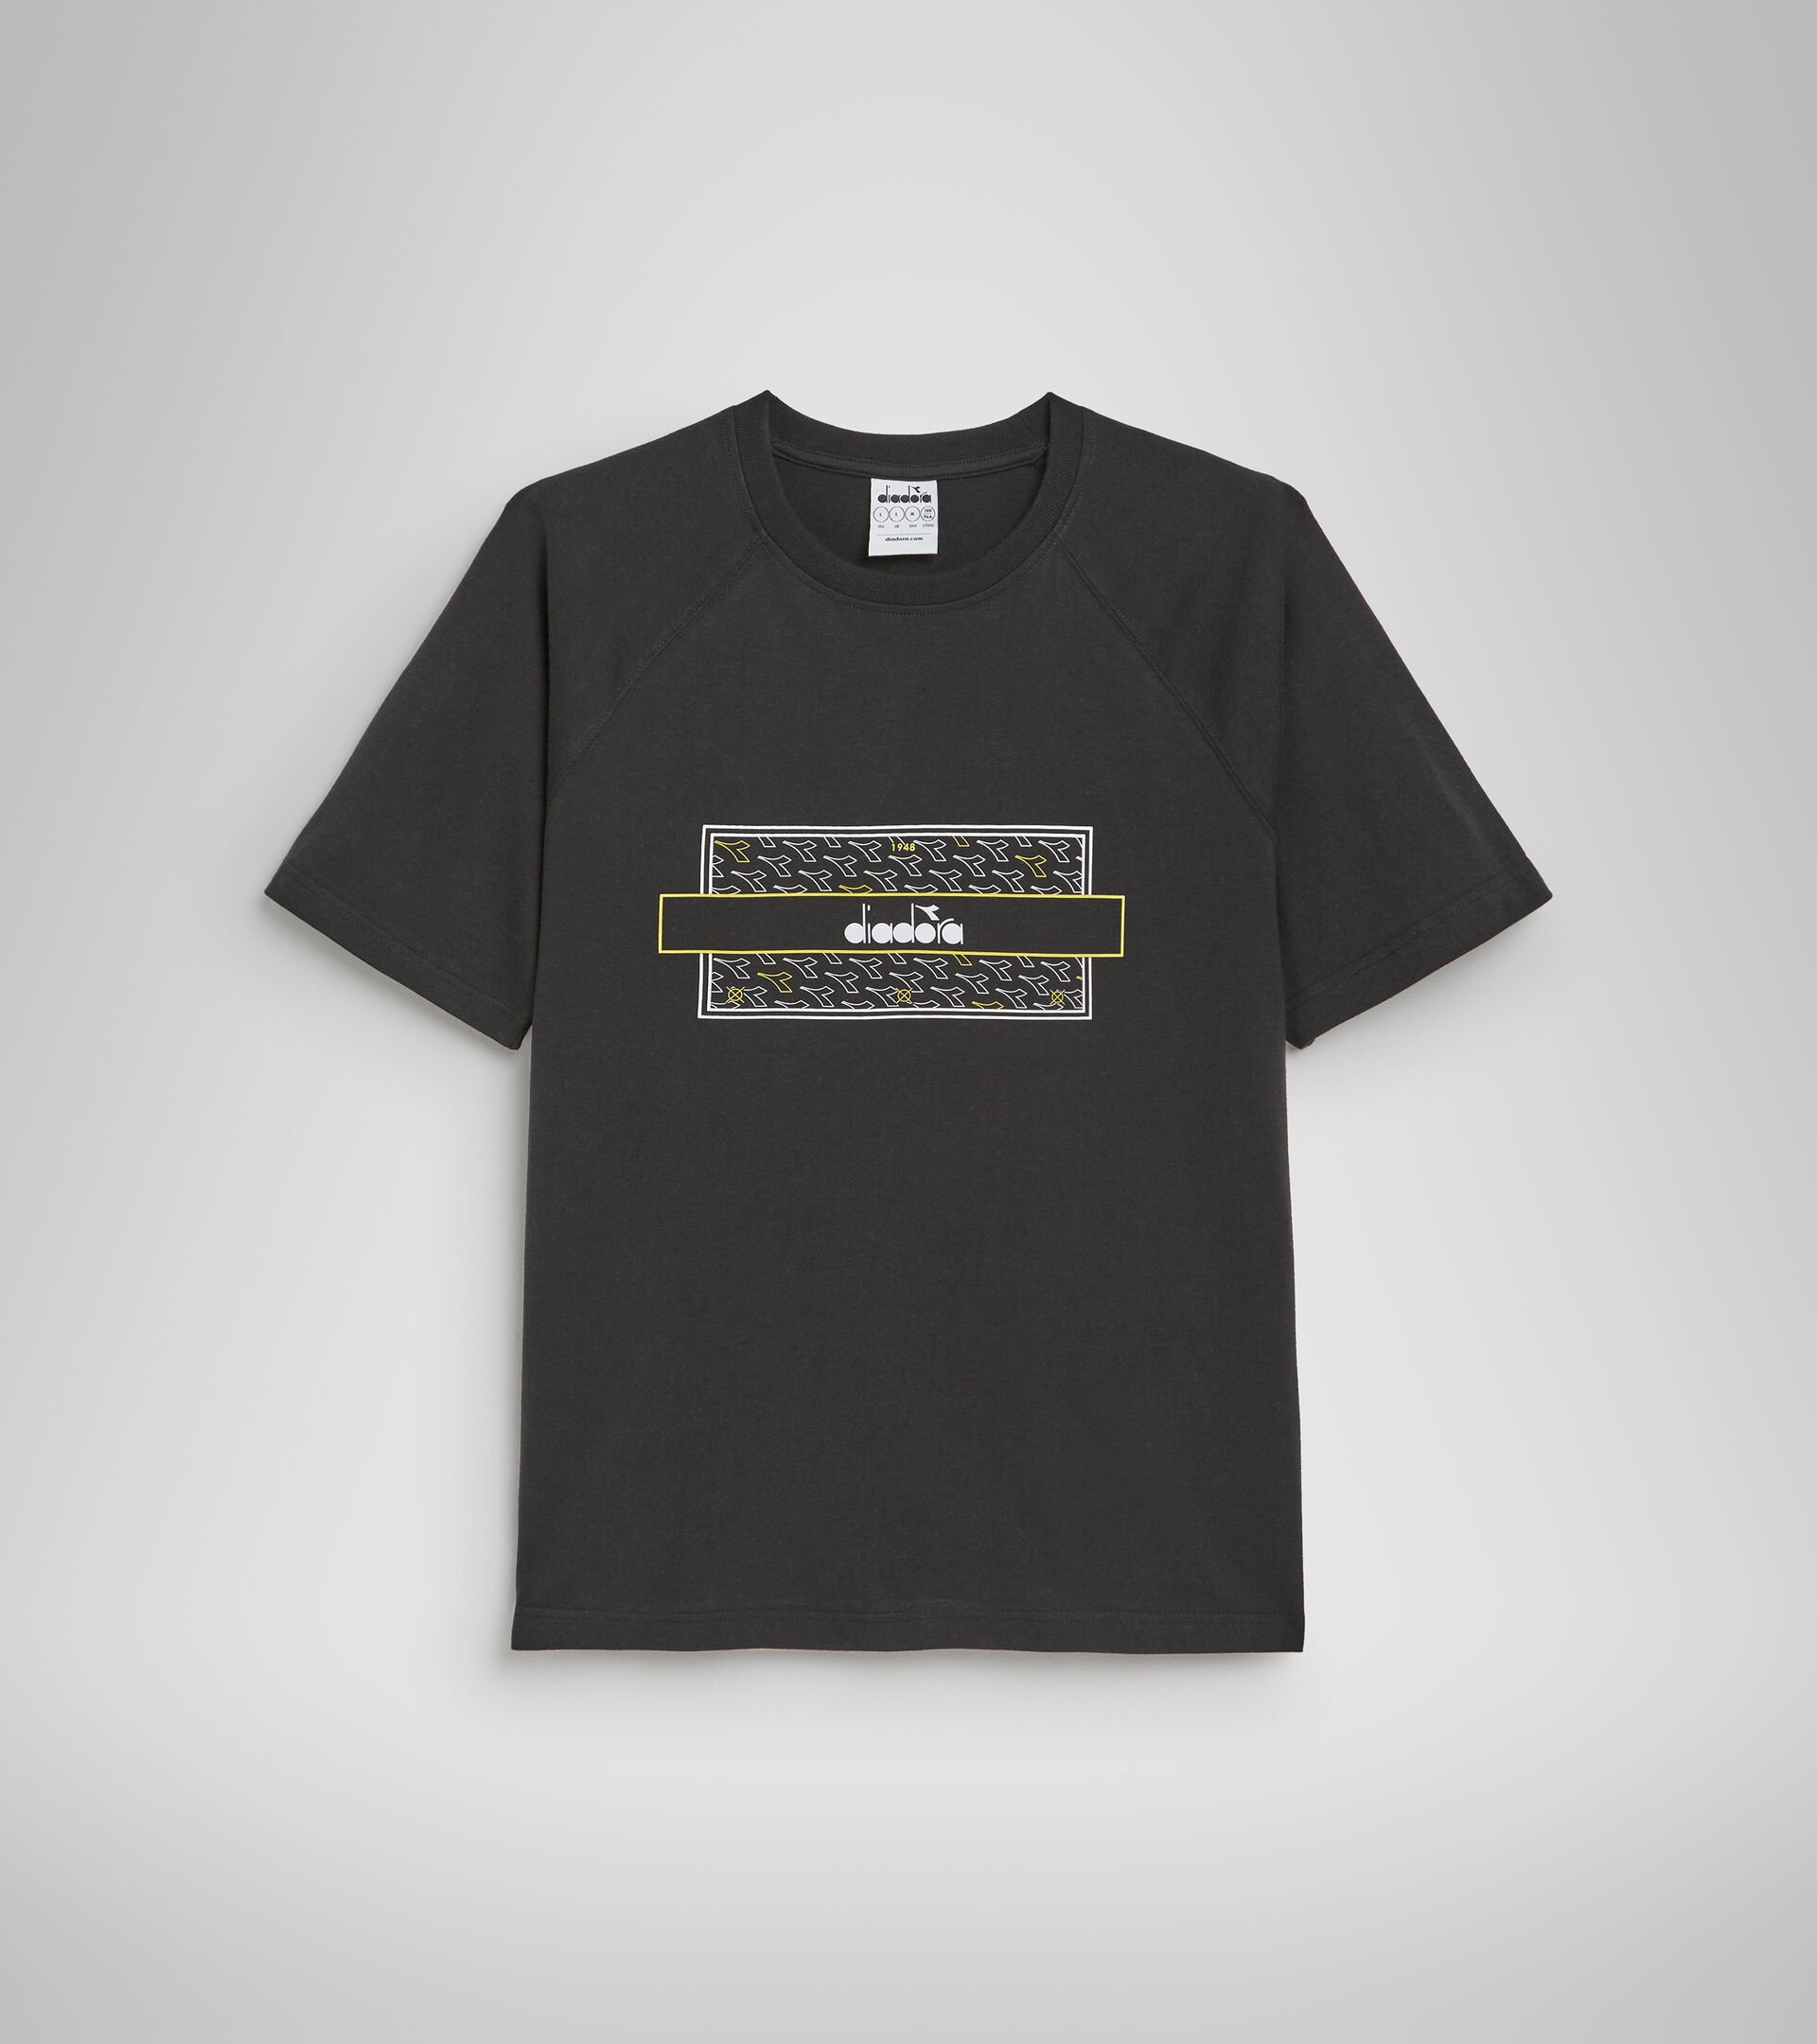 Cotton and polyester T-shirt - Men’s T-SHIRT SS  URBANITY BLACK - Diadora